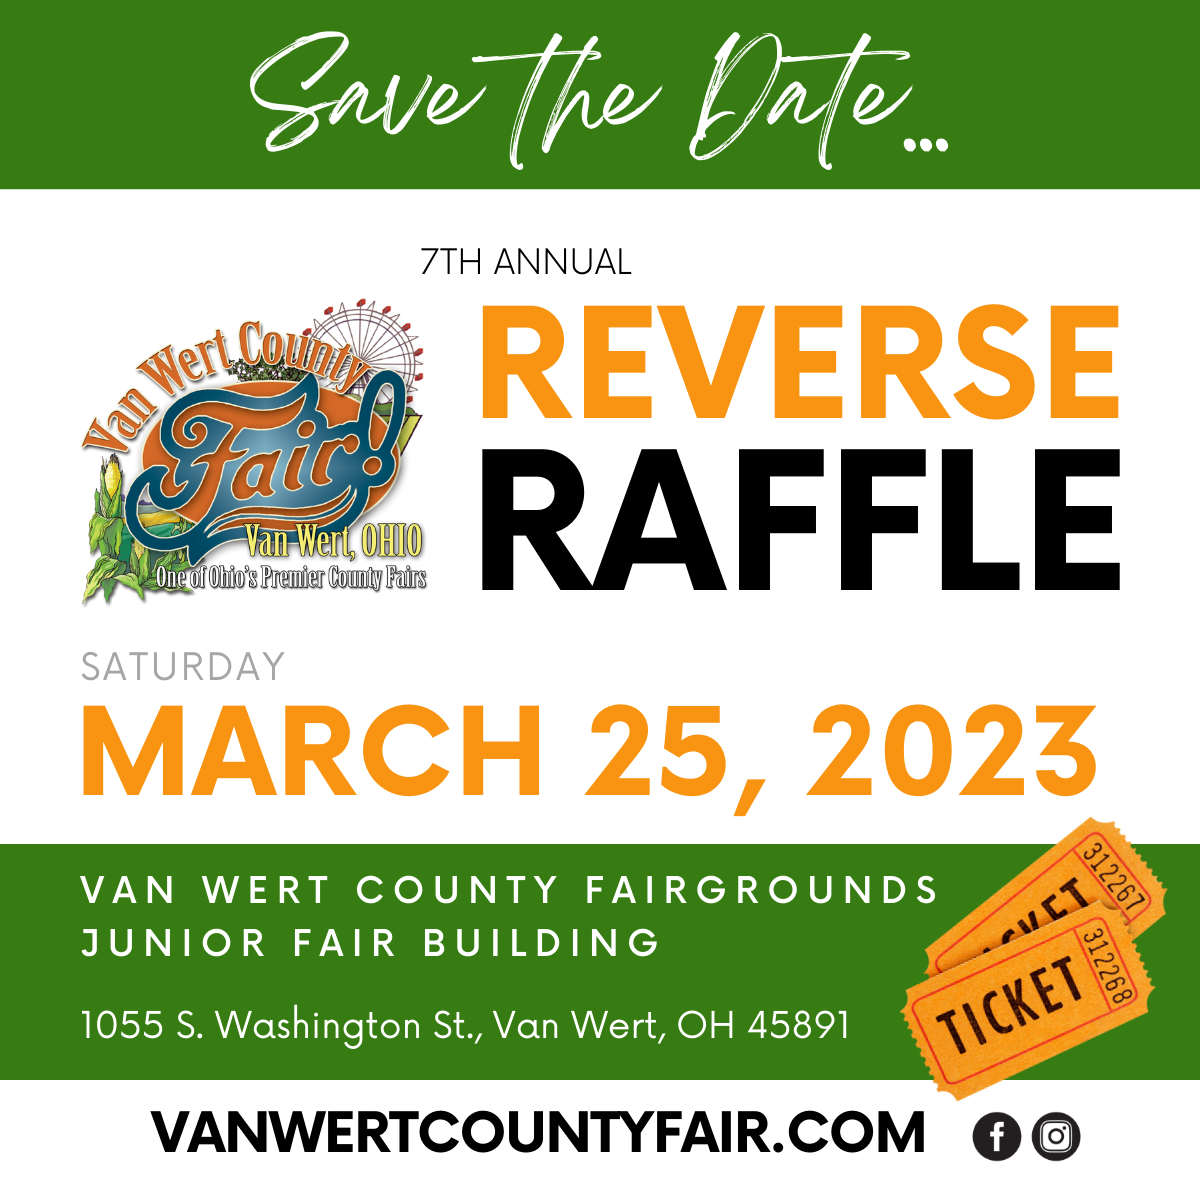 Van Wert County Fairground Reverse Raffle